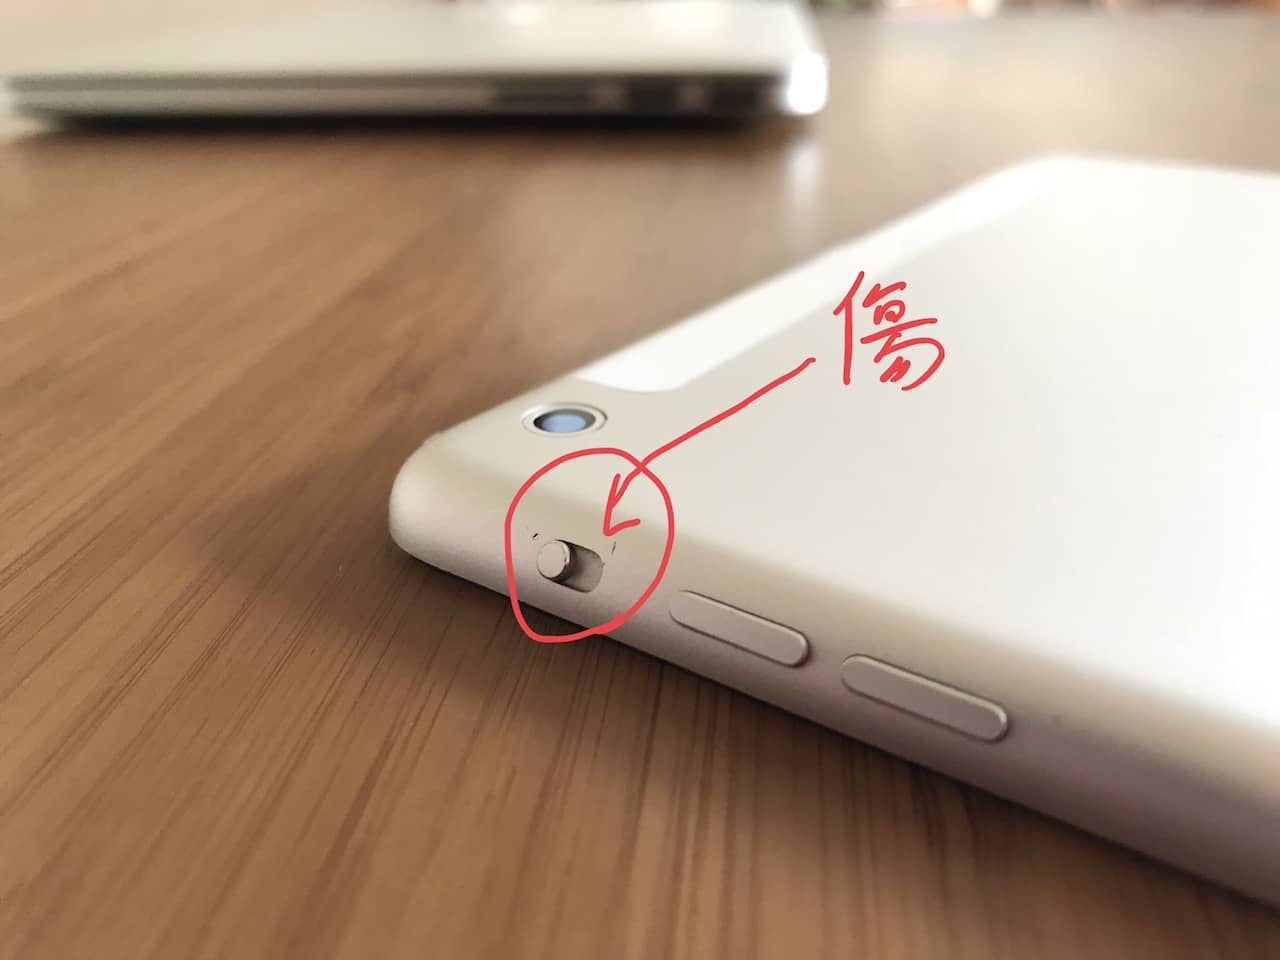 iPad airの側面についた傷を赤い字で図示しています